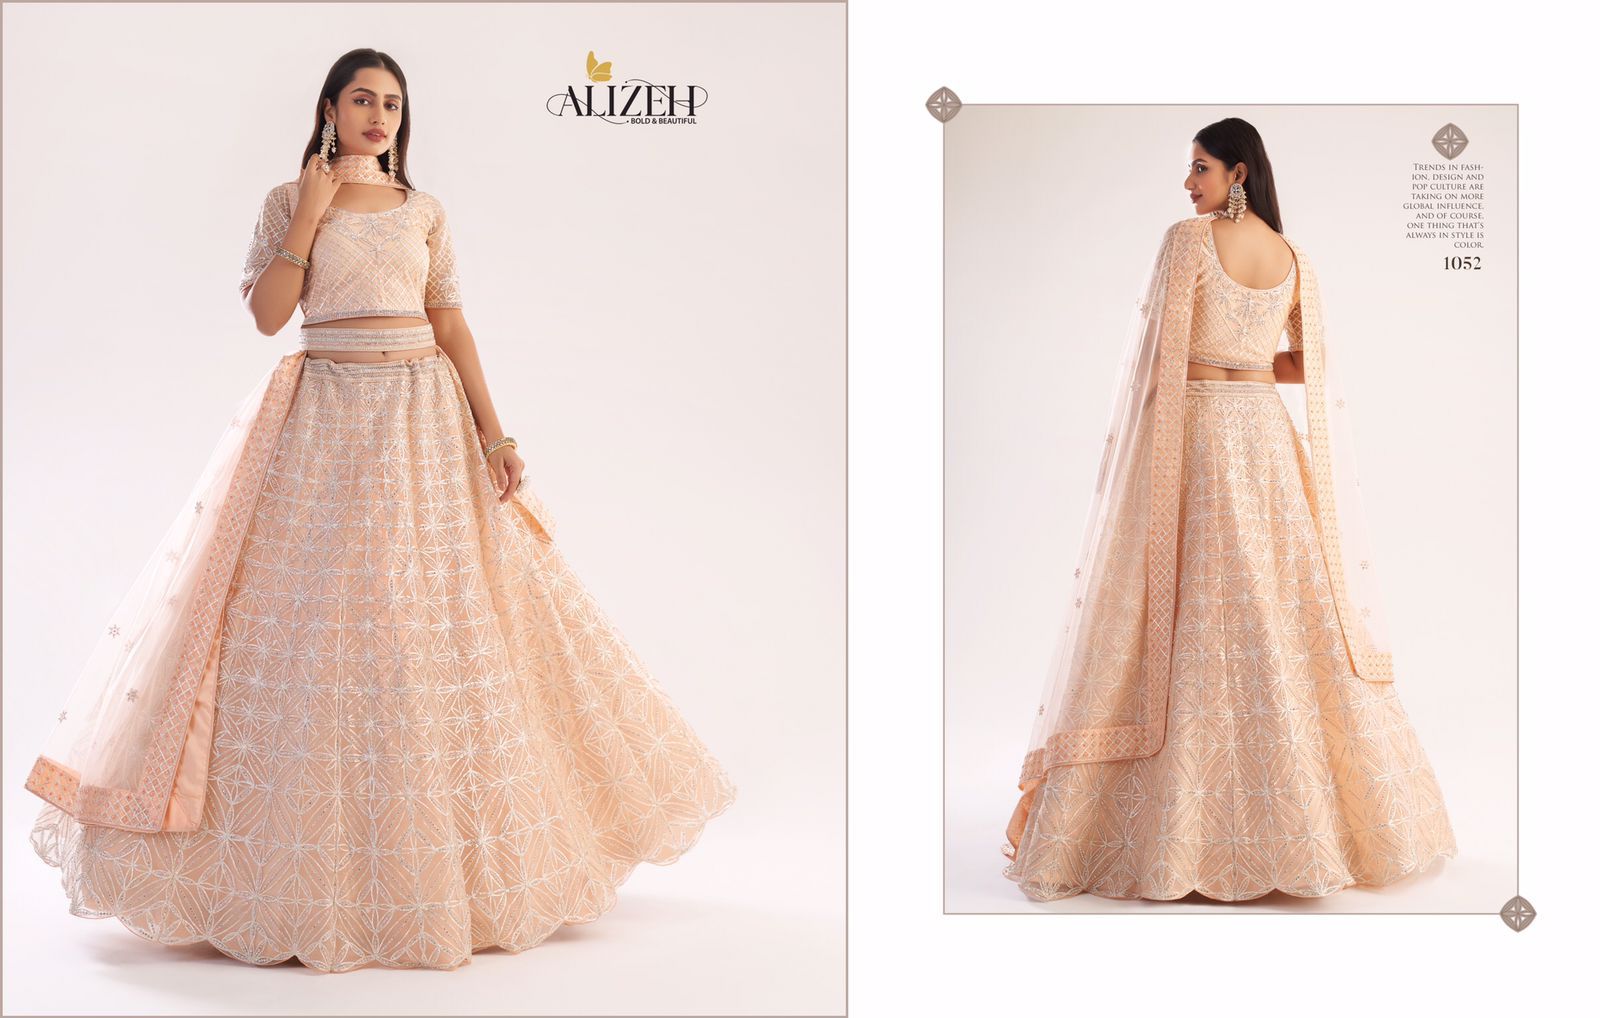 Alizeh Bridal Heritage Premium Collection 1052